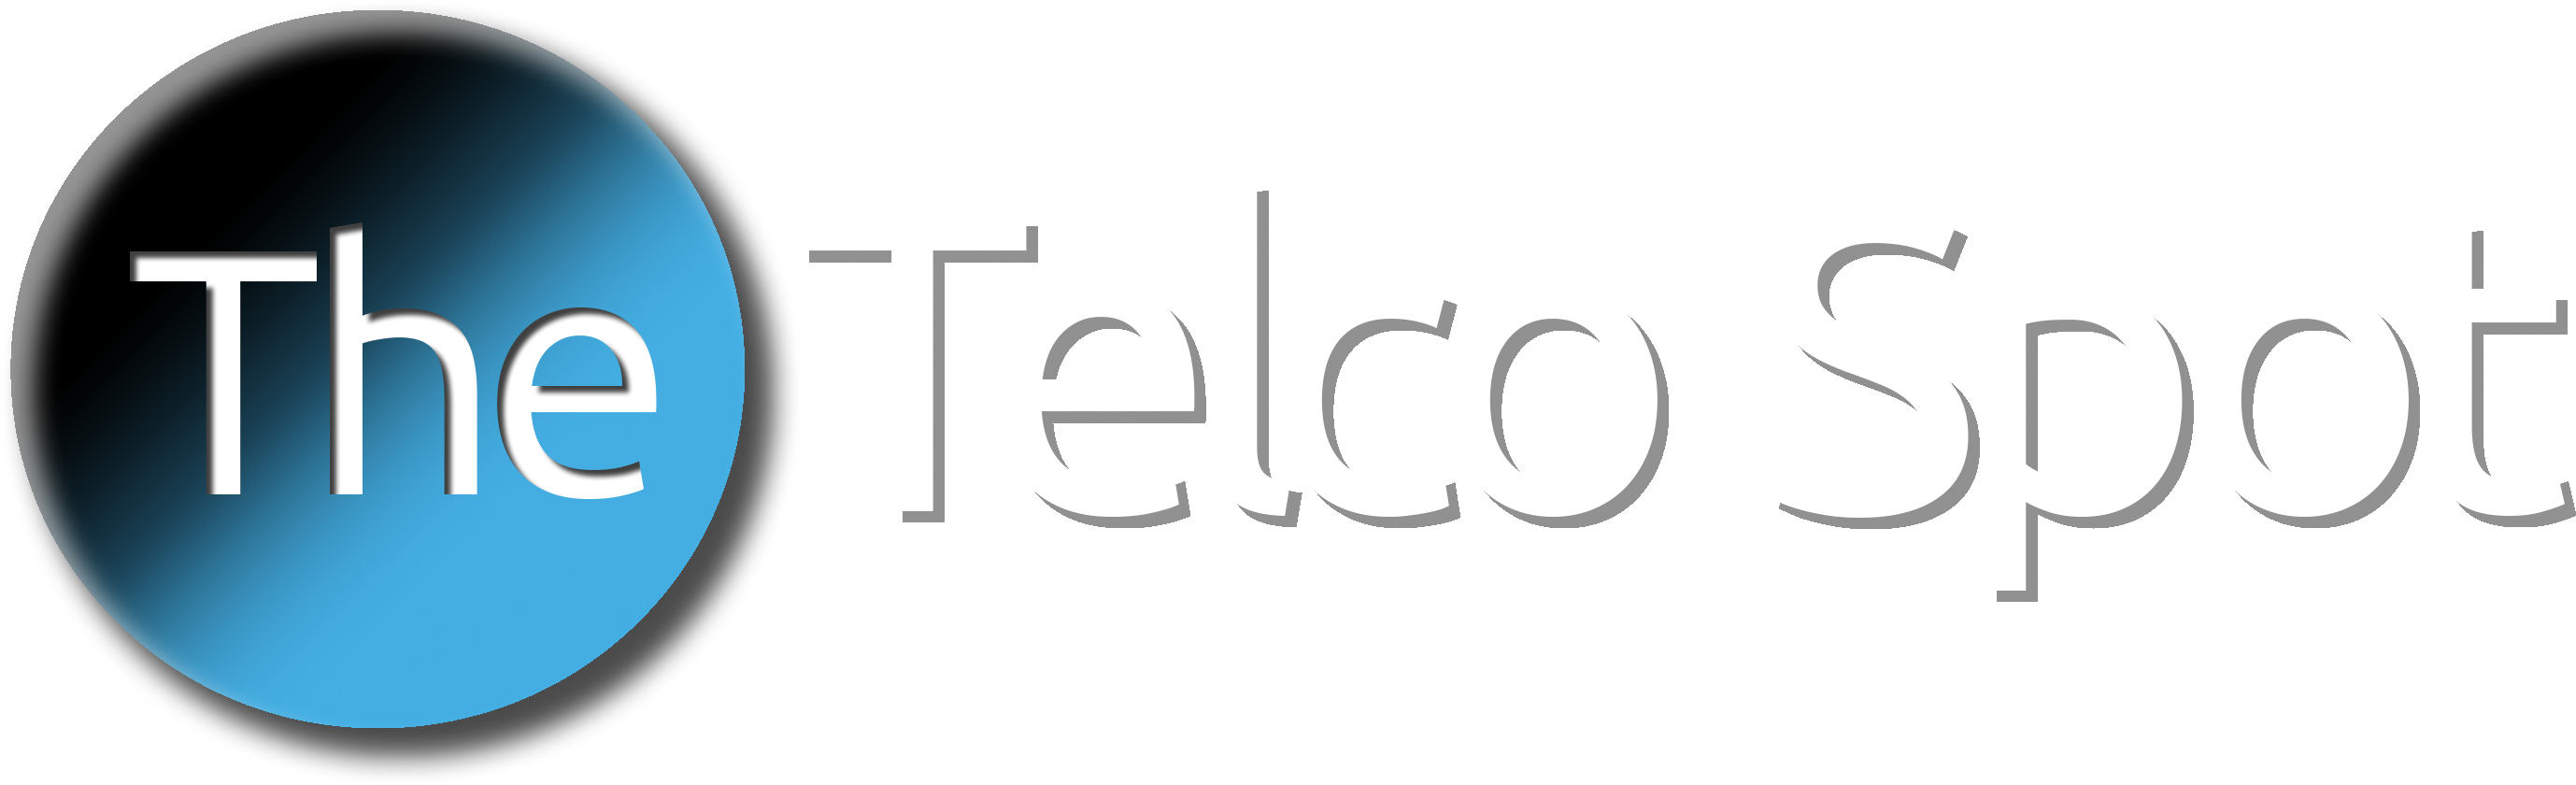 The Telco Spot